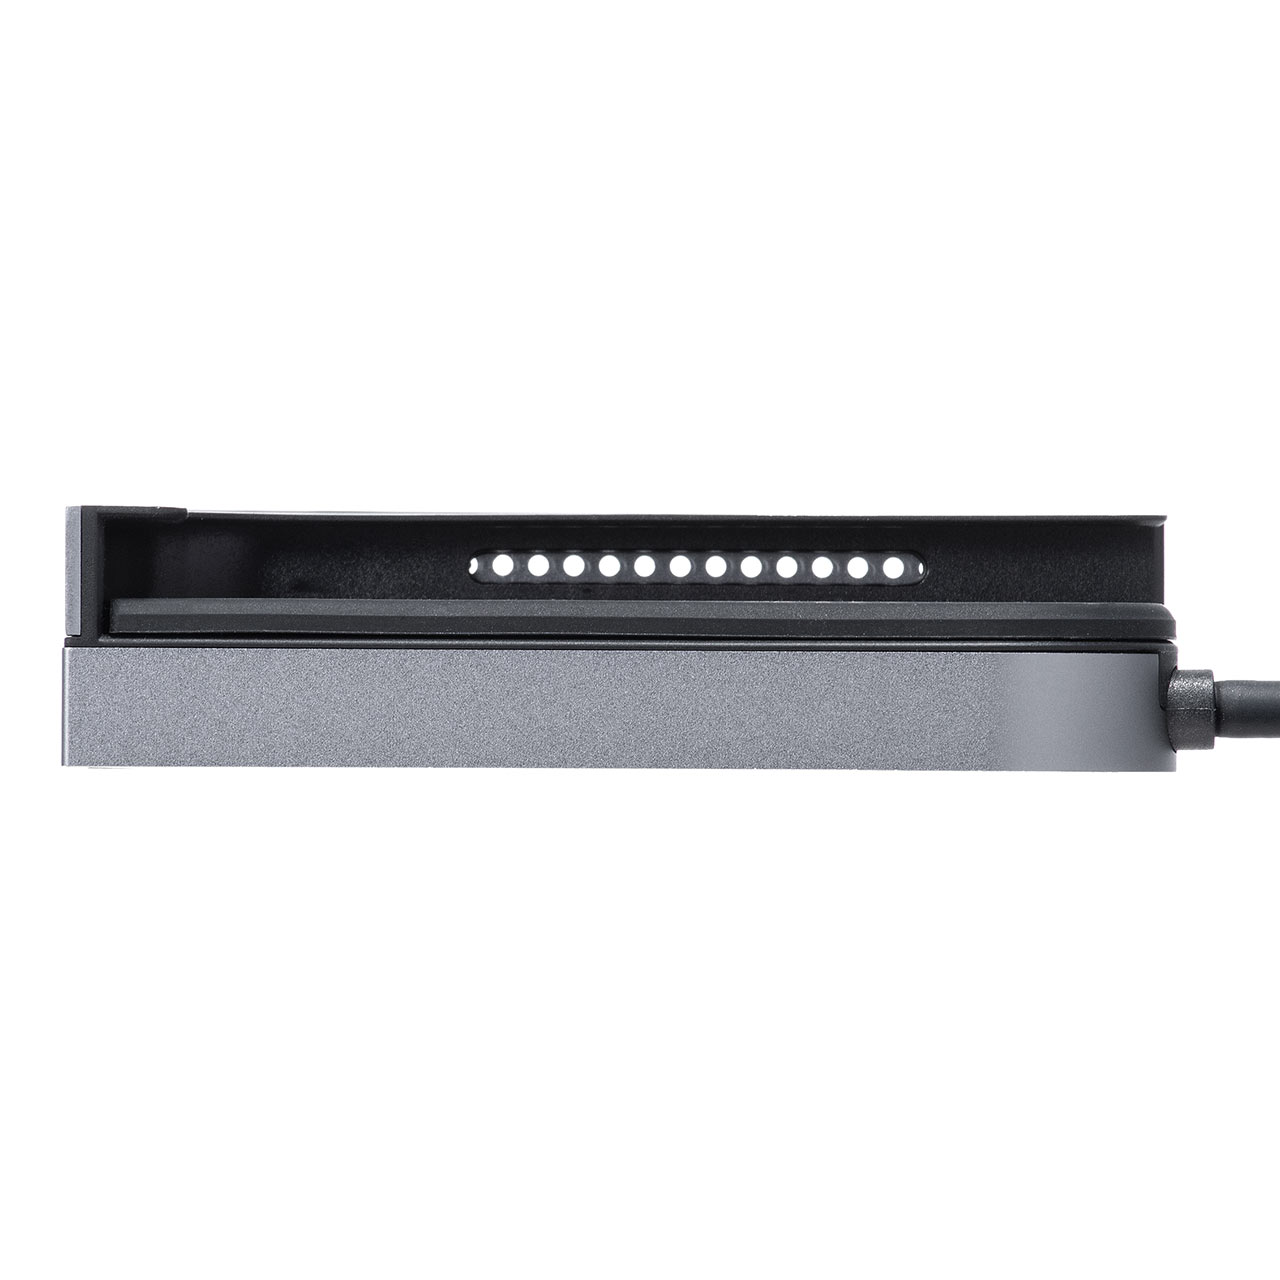 iPad Prop USBnu 6in1 HDMI USB Type-C USB A|[g 3.5mmWbN SD/microSDJ[h[_[ 400-ADR324GY